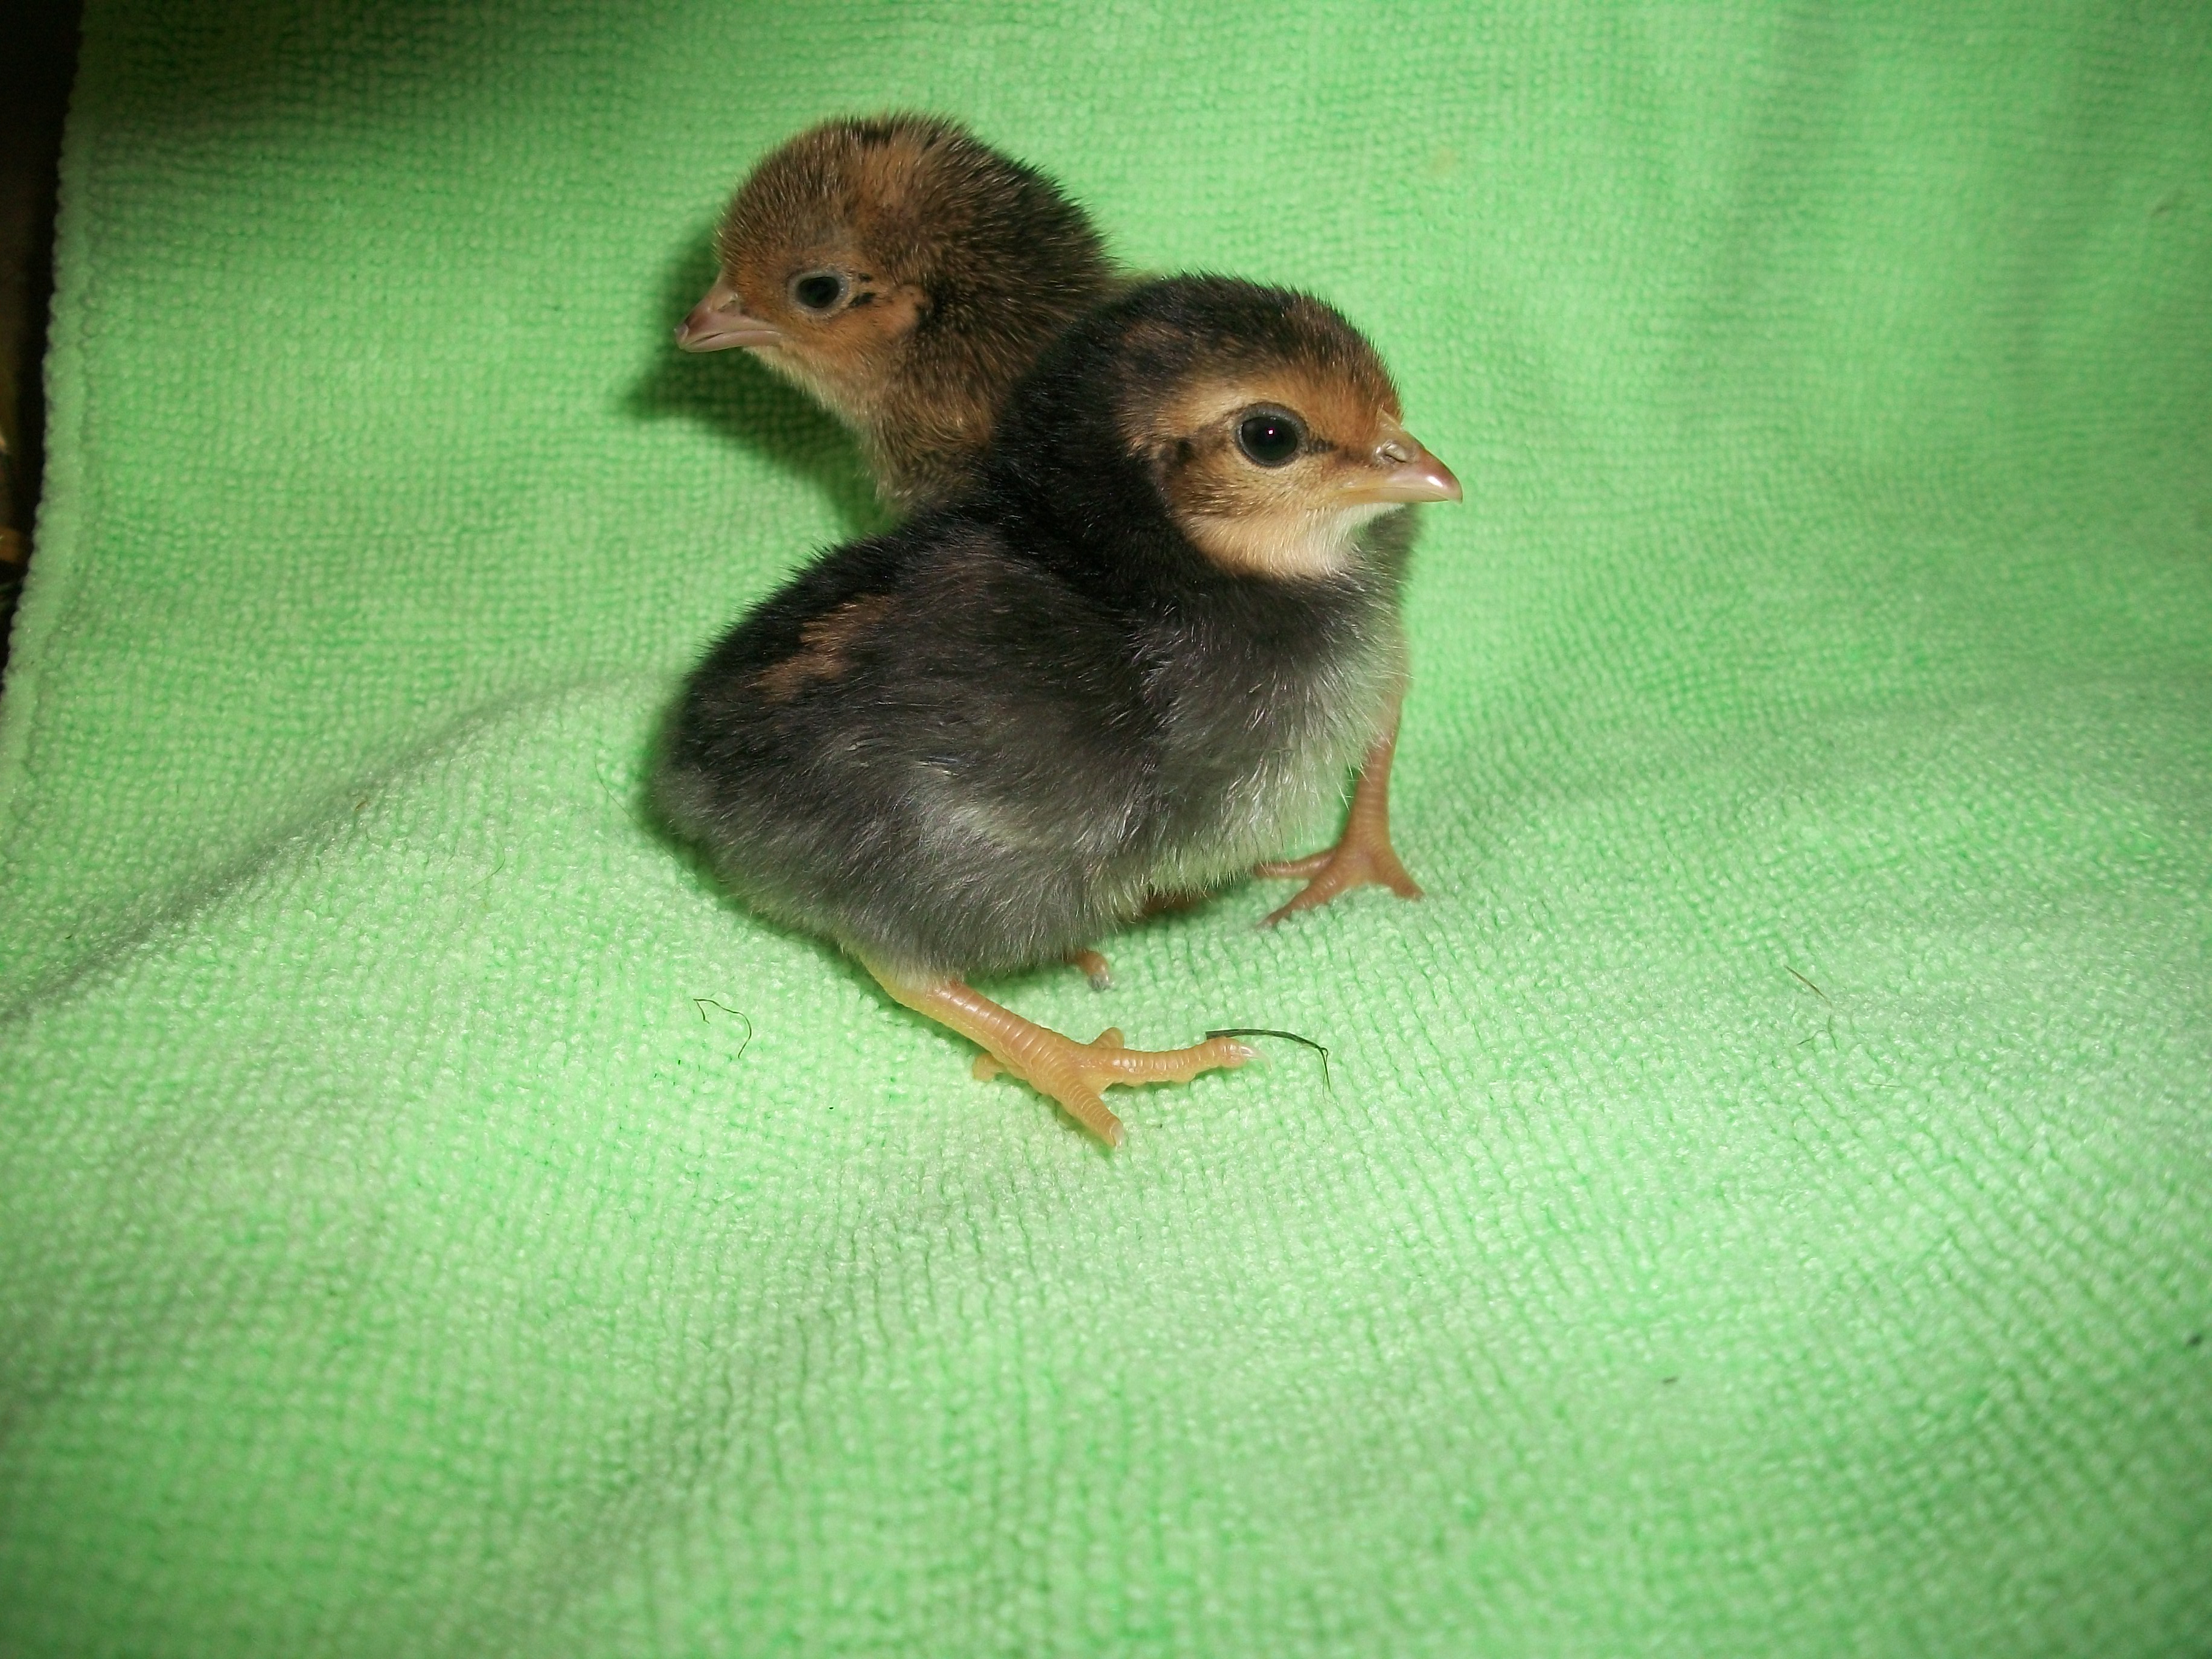 2014 Easter hatch along chicks